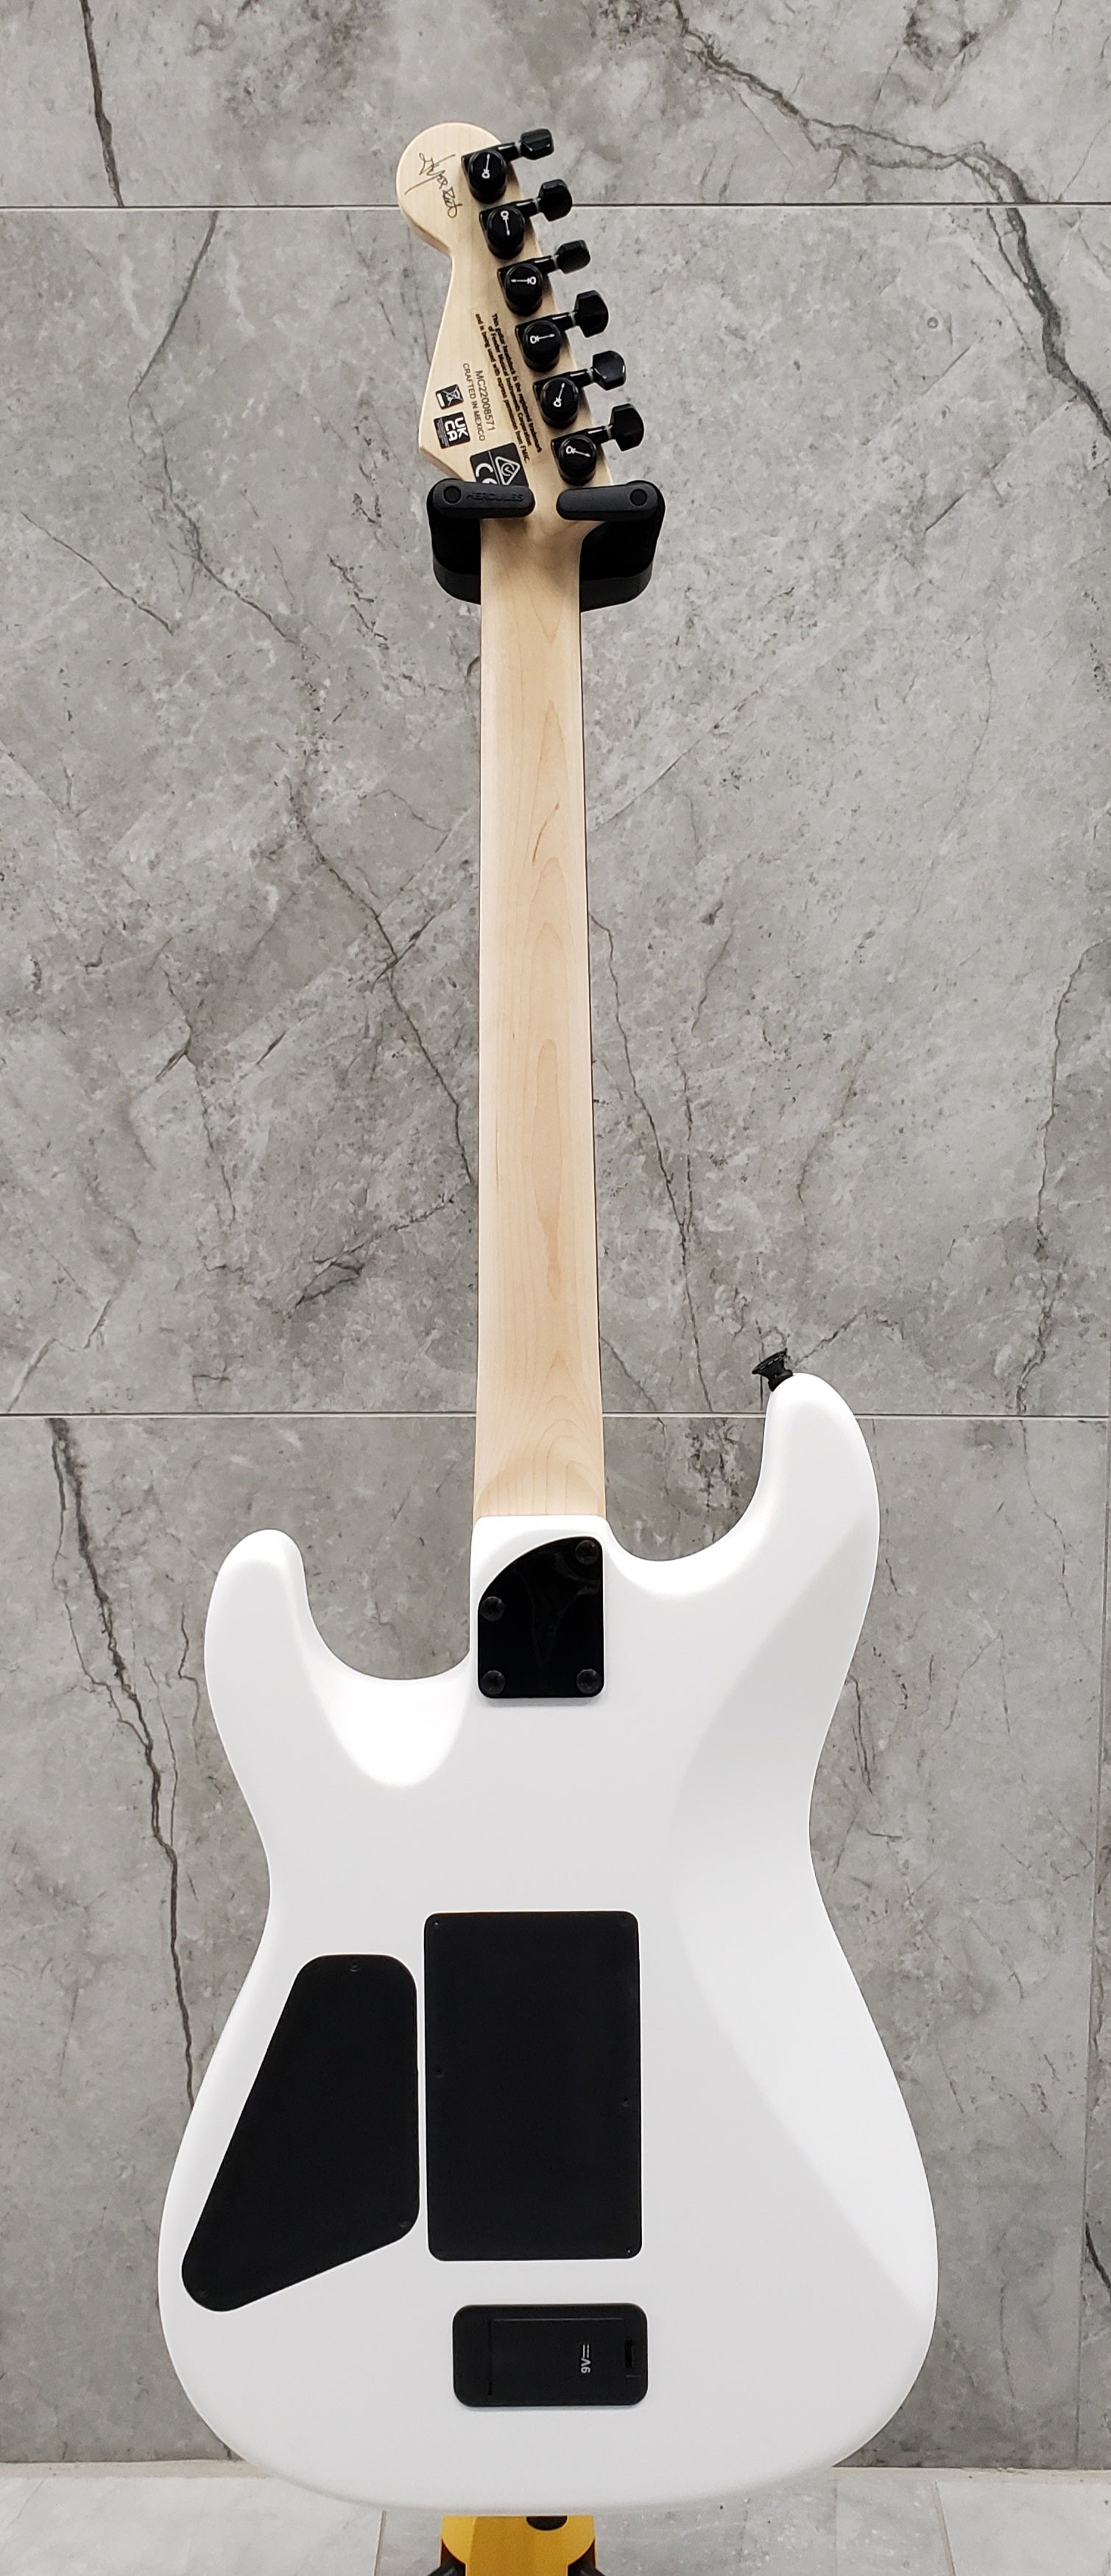 CHARVEL Jim Root Signature Pro-Mod San Dimas Style 1 HH FR E, Ebony Fingerboard, Satin White 2965801876 SERIAL NUMBER MC22008571 - 8.0 LBS